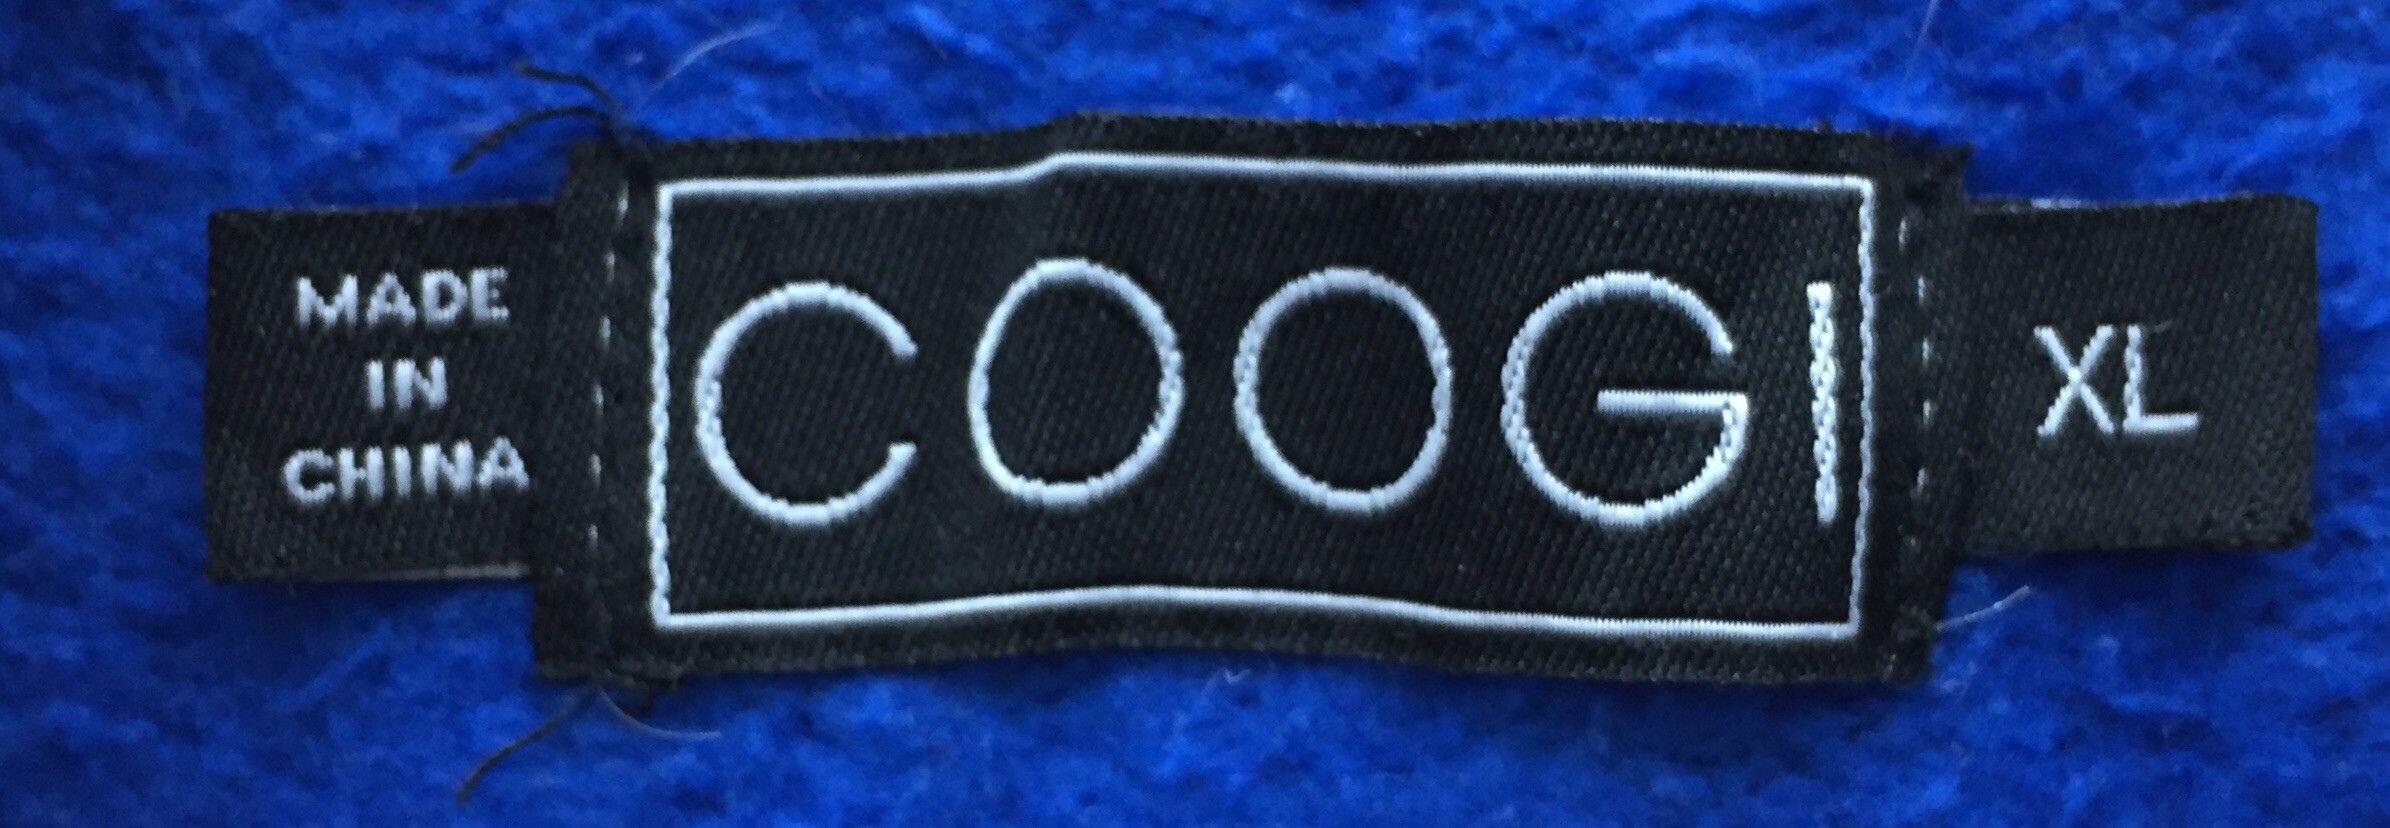 Coogi Og Coogi Expidition Mountain Jacket Sweater Size US XL / EU 56 / 4 - 8 Preview